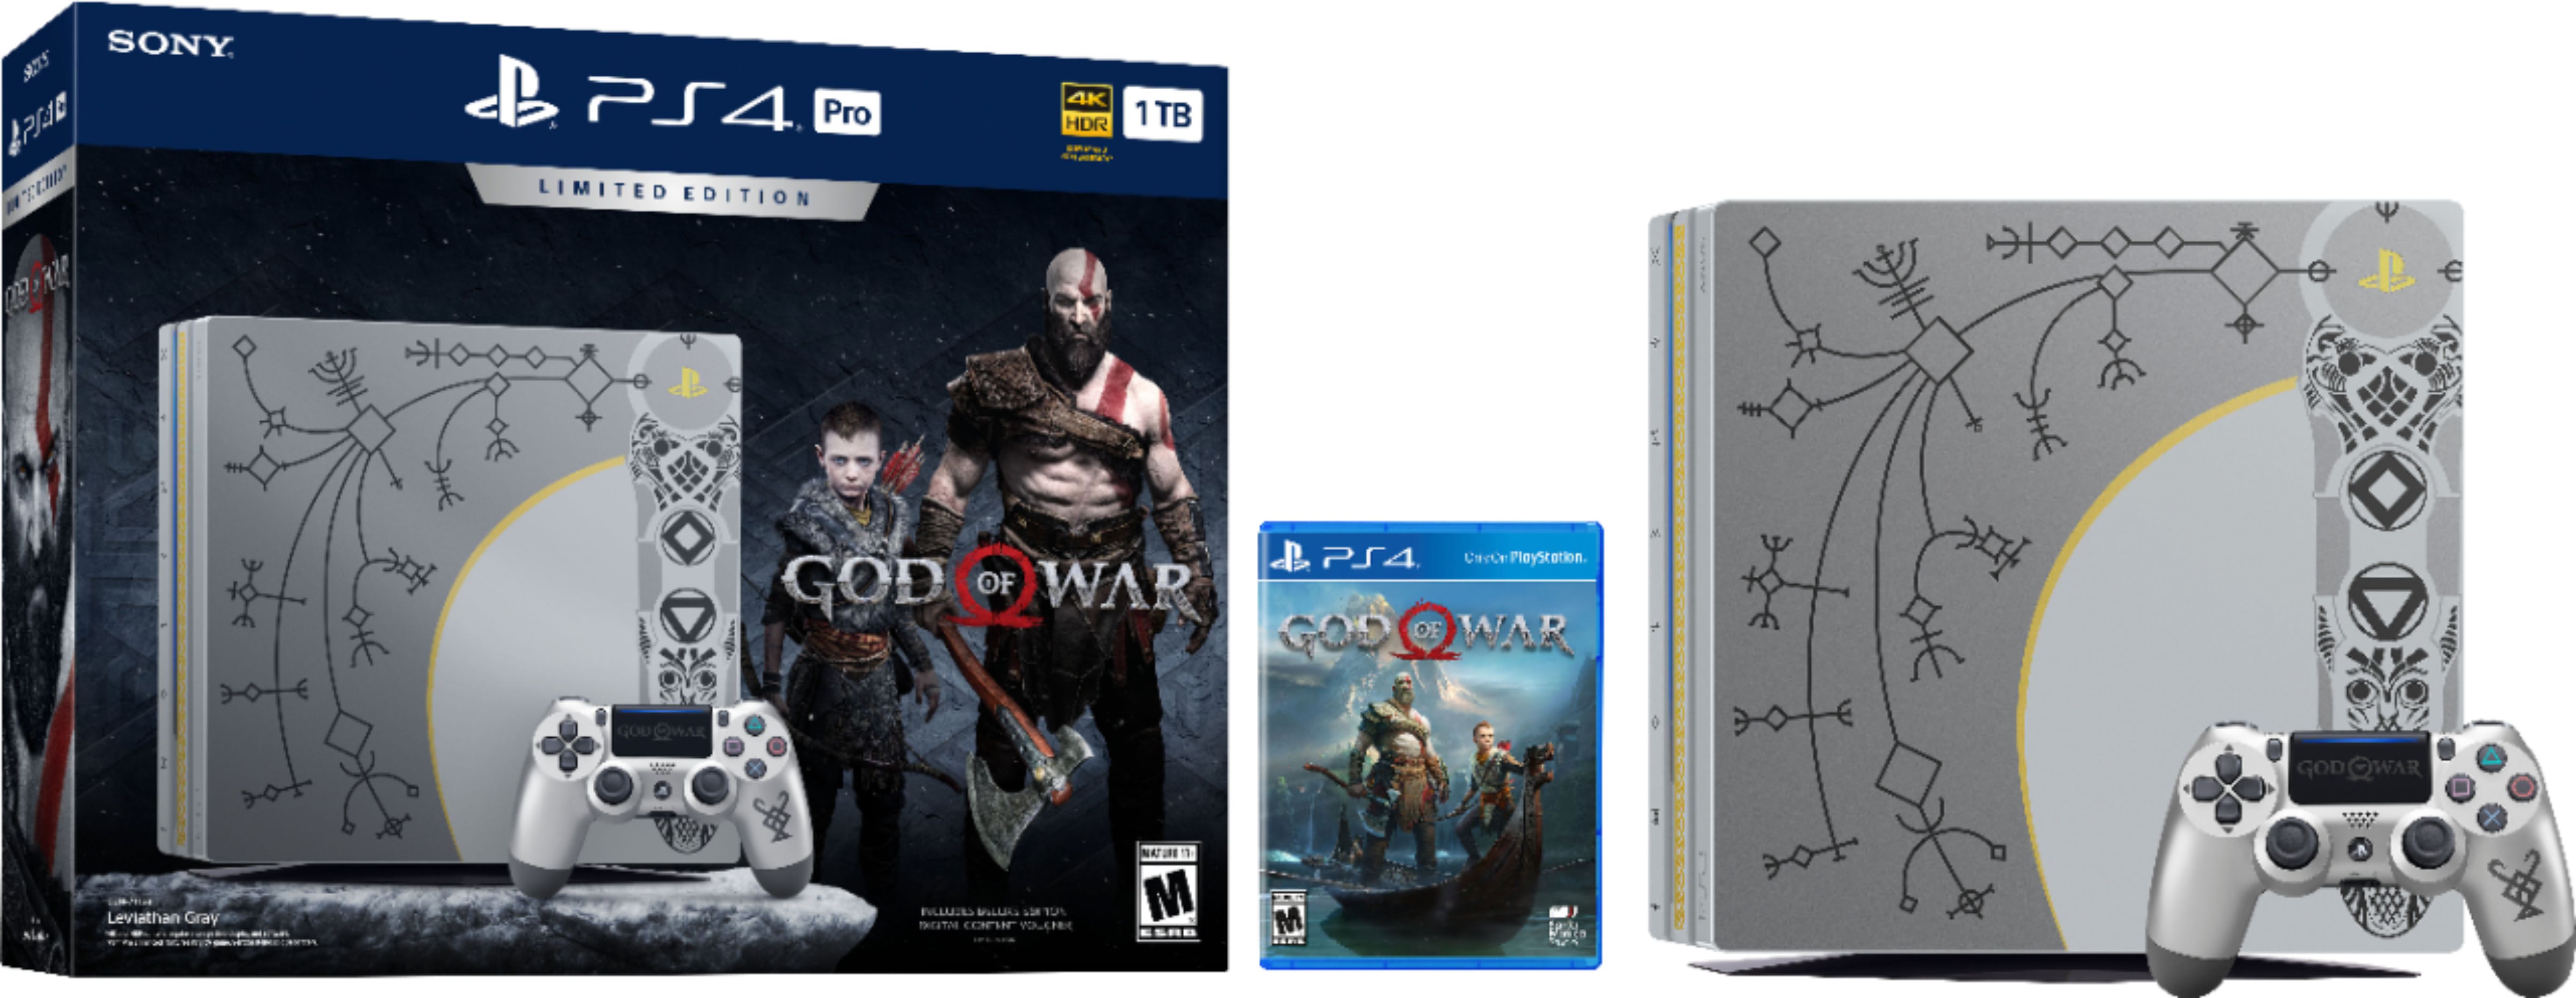 Rig mand Gendanne Kronisk Best Buy: Sony PlayStation 4 Pro 1TB Limited Edition God of War Console  Bundle 3002212